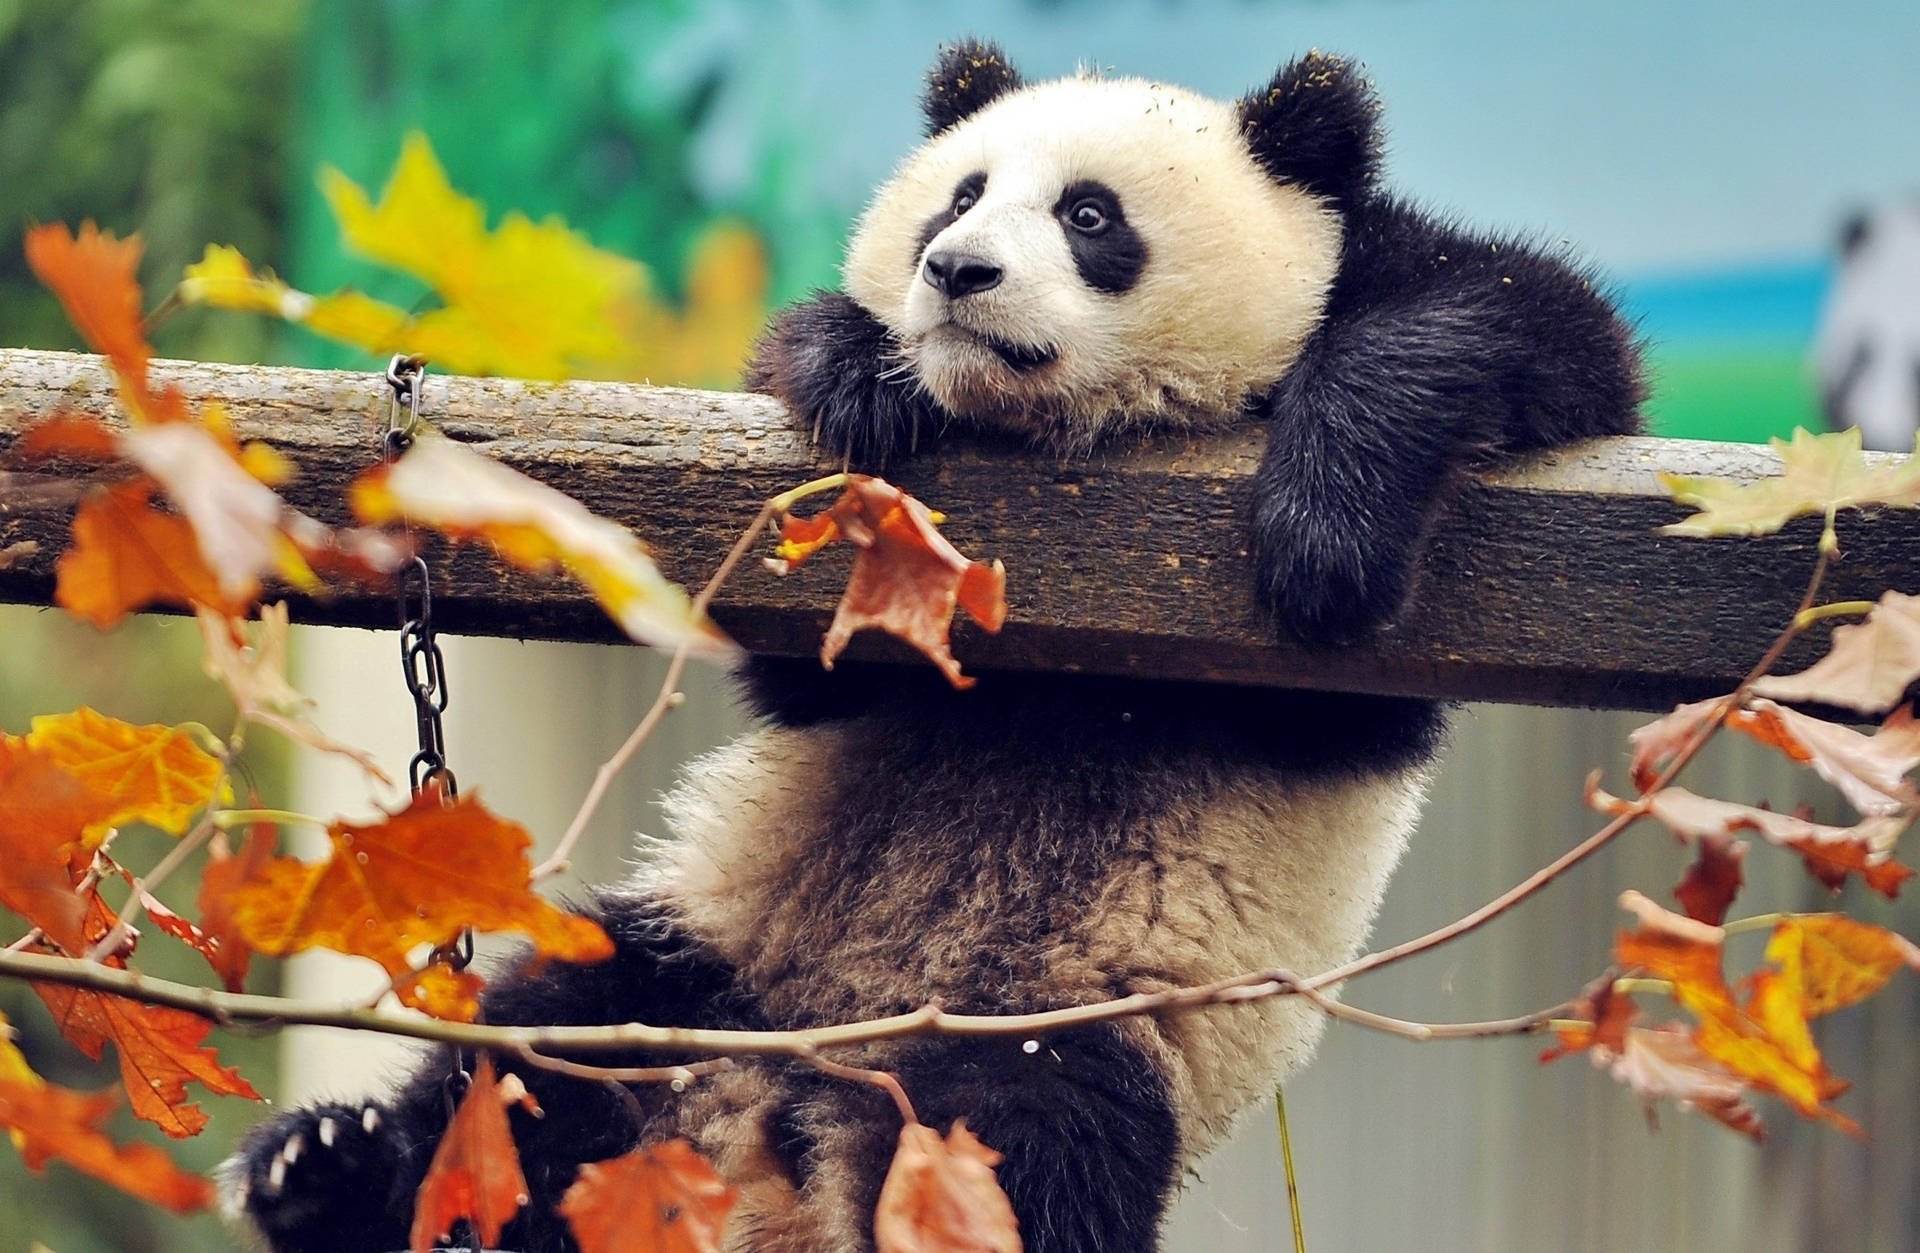 Cute Panda Hanging On A Wood